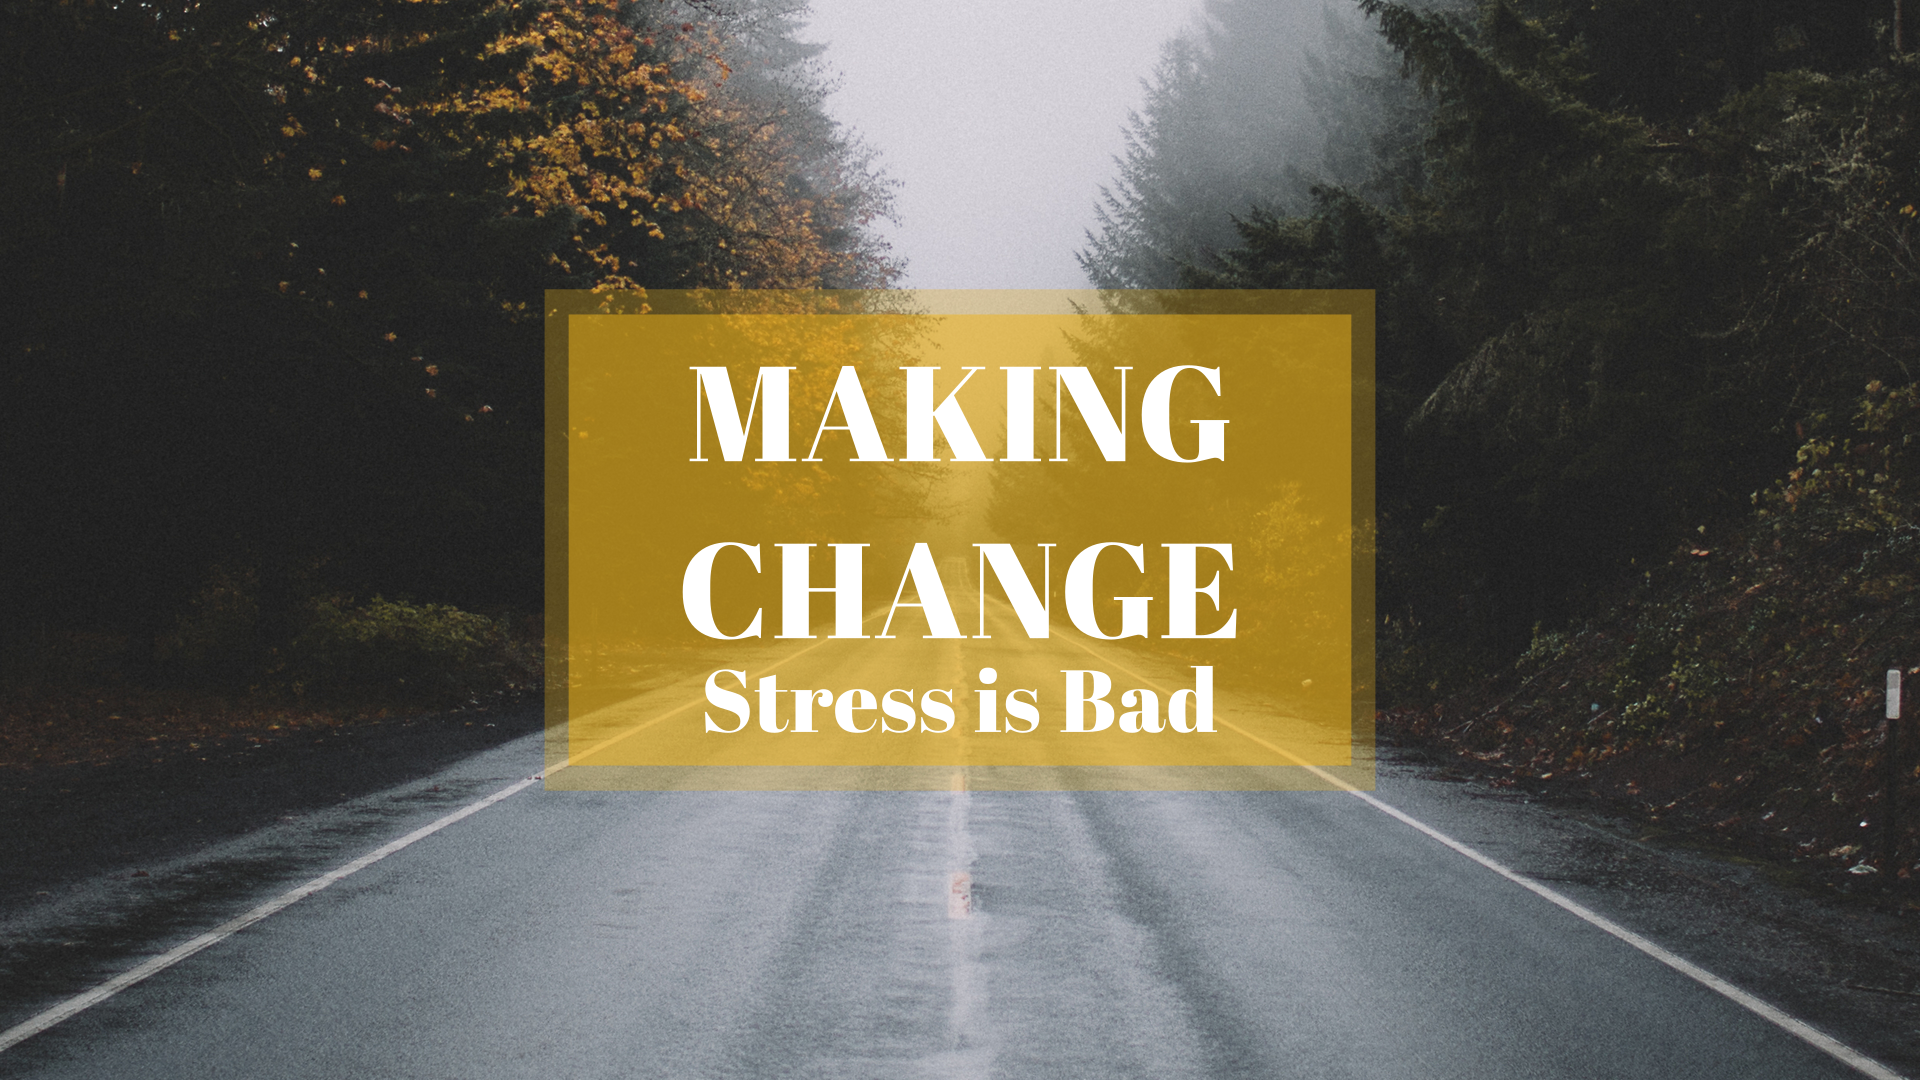 Making Change: Stress is Bad